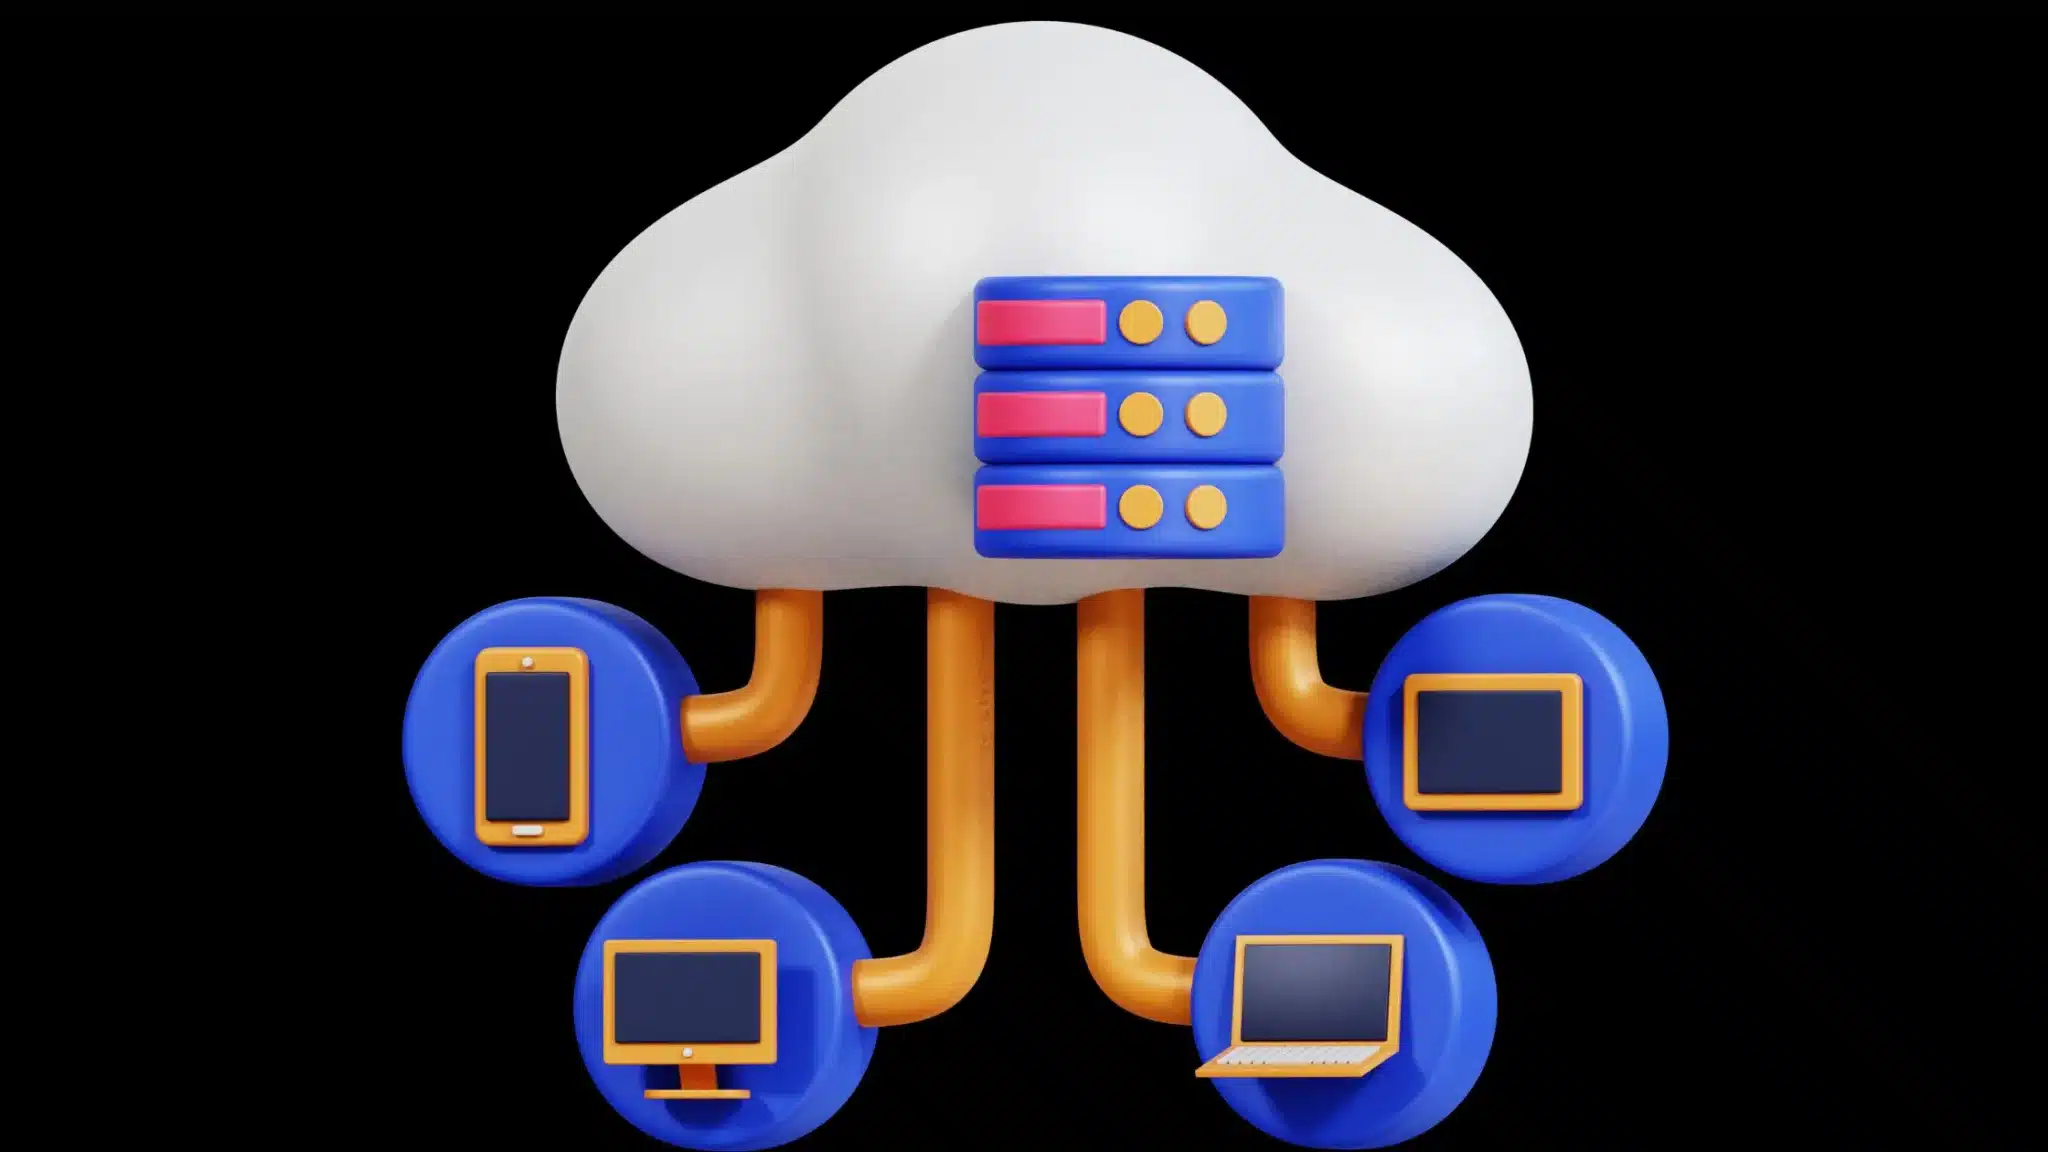 cloud based network management